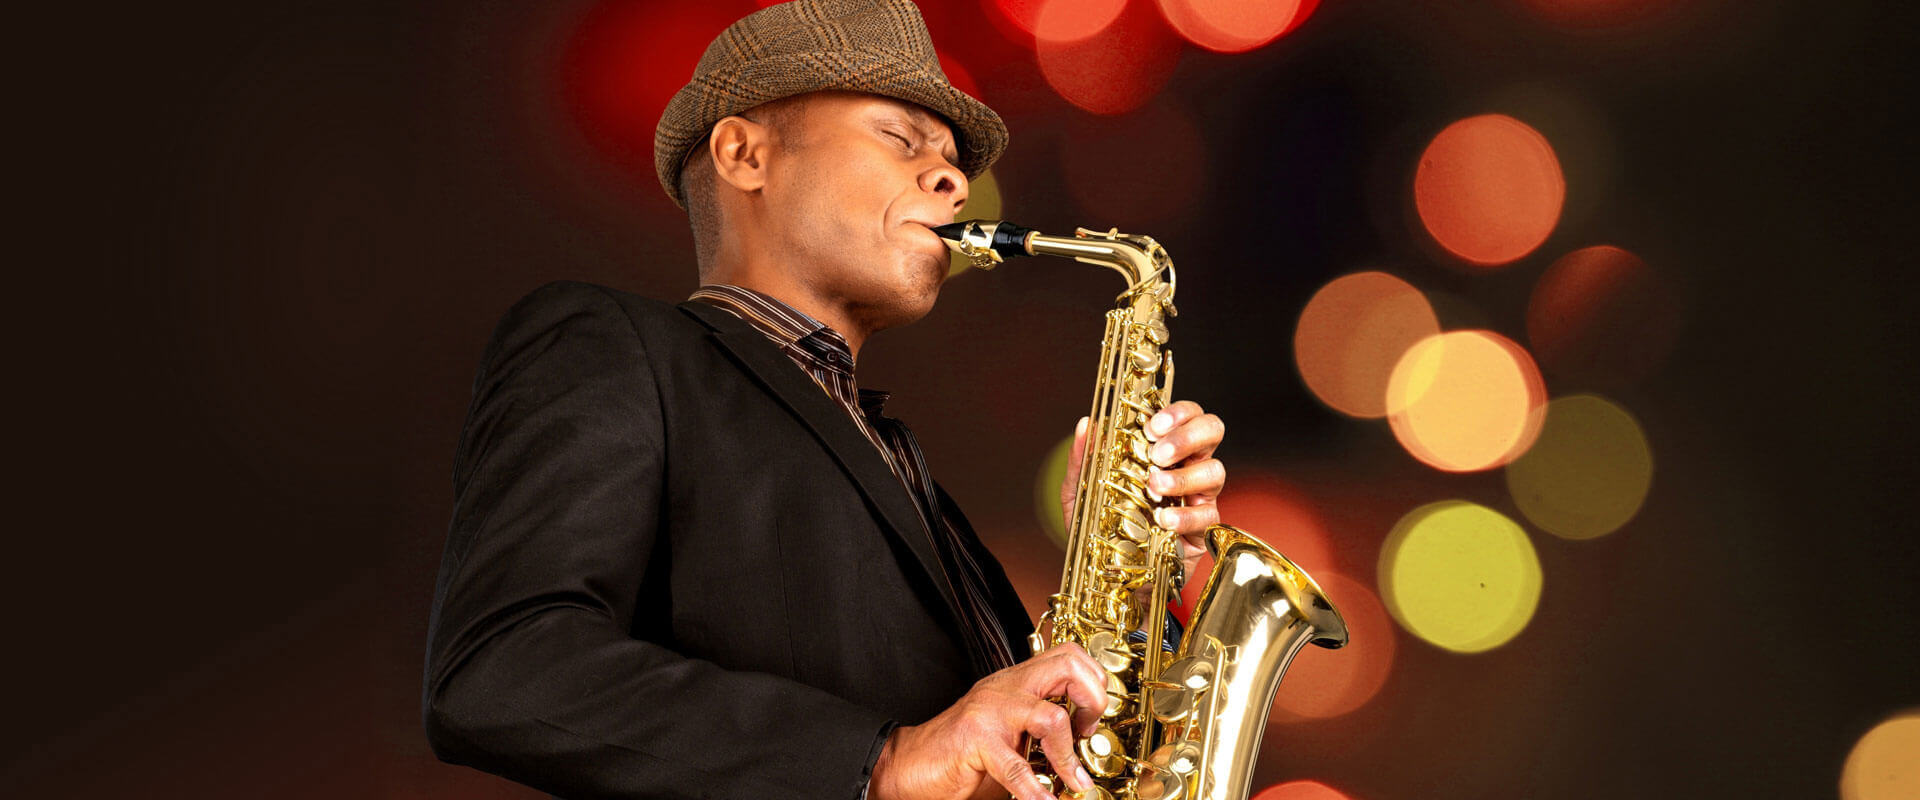 Saxophone Lessons Pittsford, NY